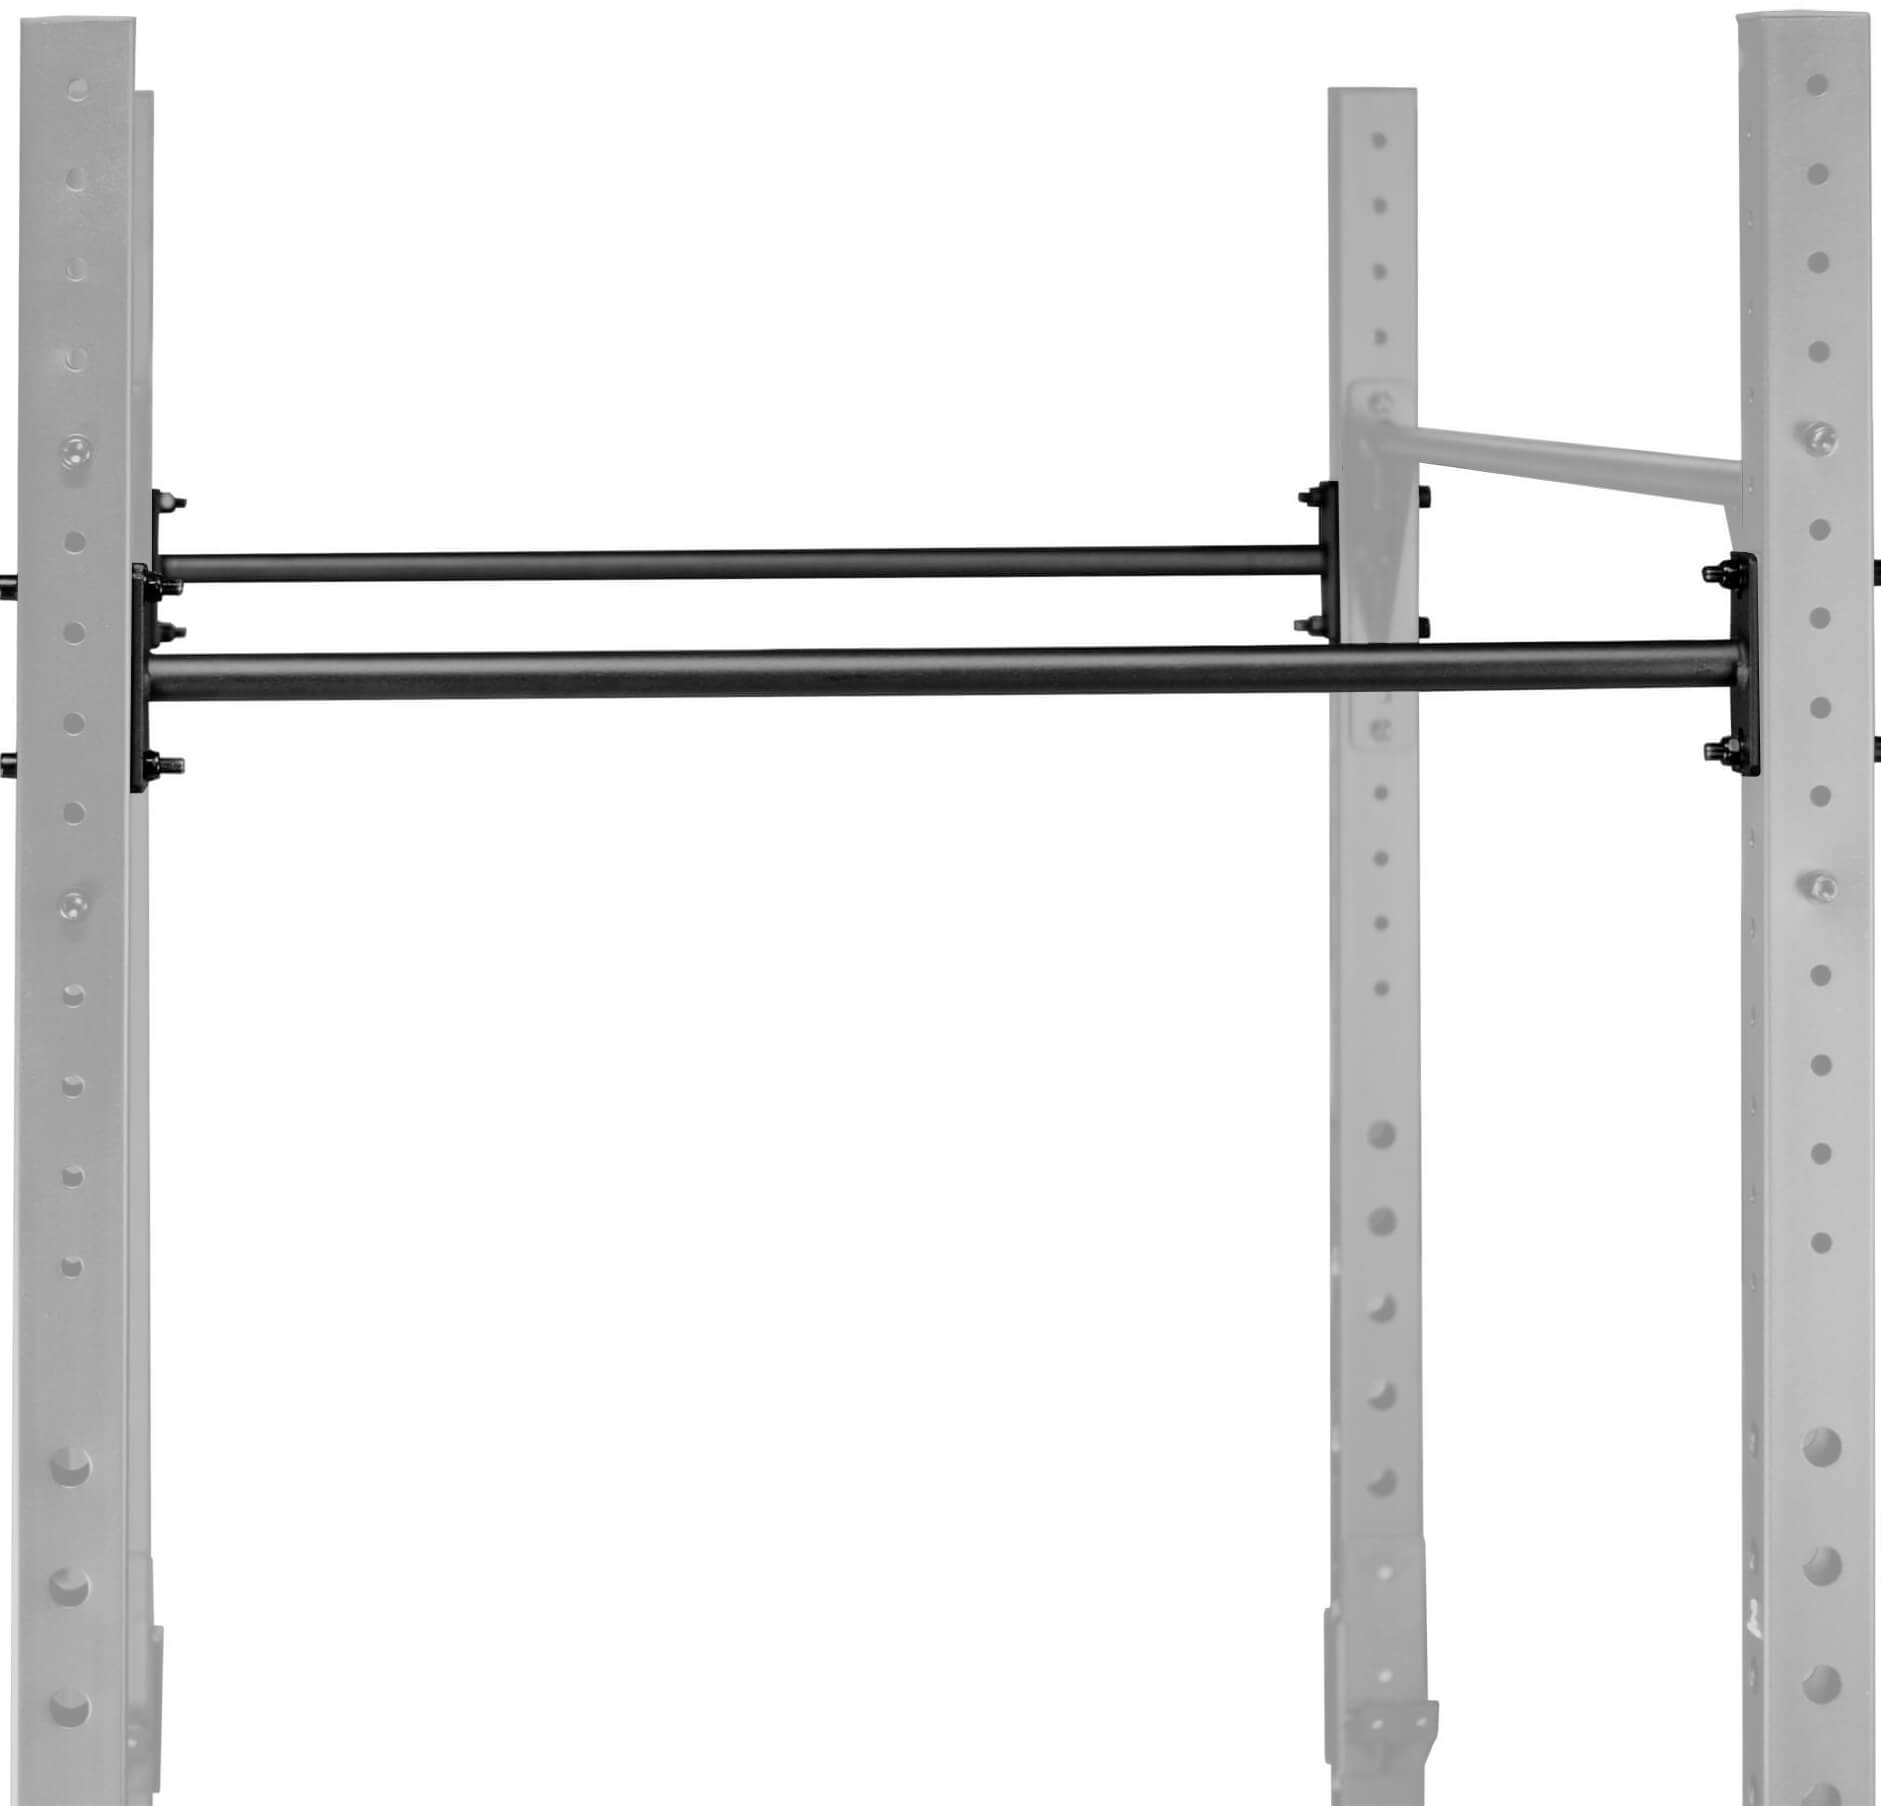 SQMIZE® Pull-Up Bar MR-M4, 108 cm